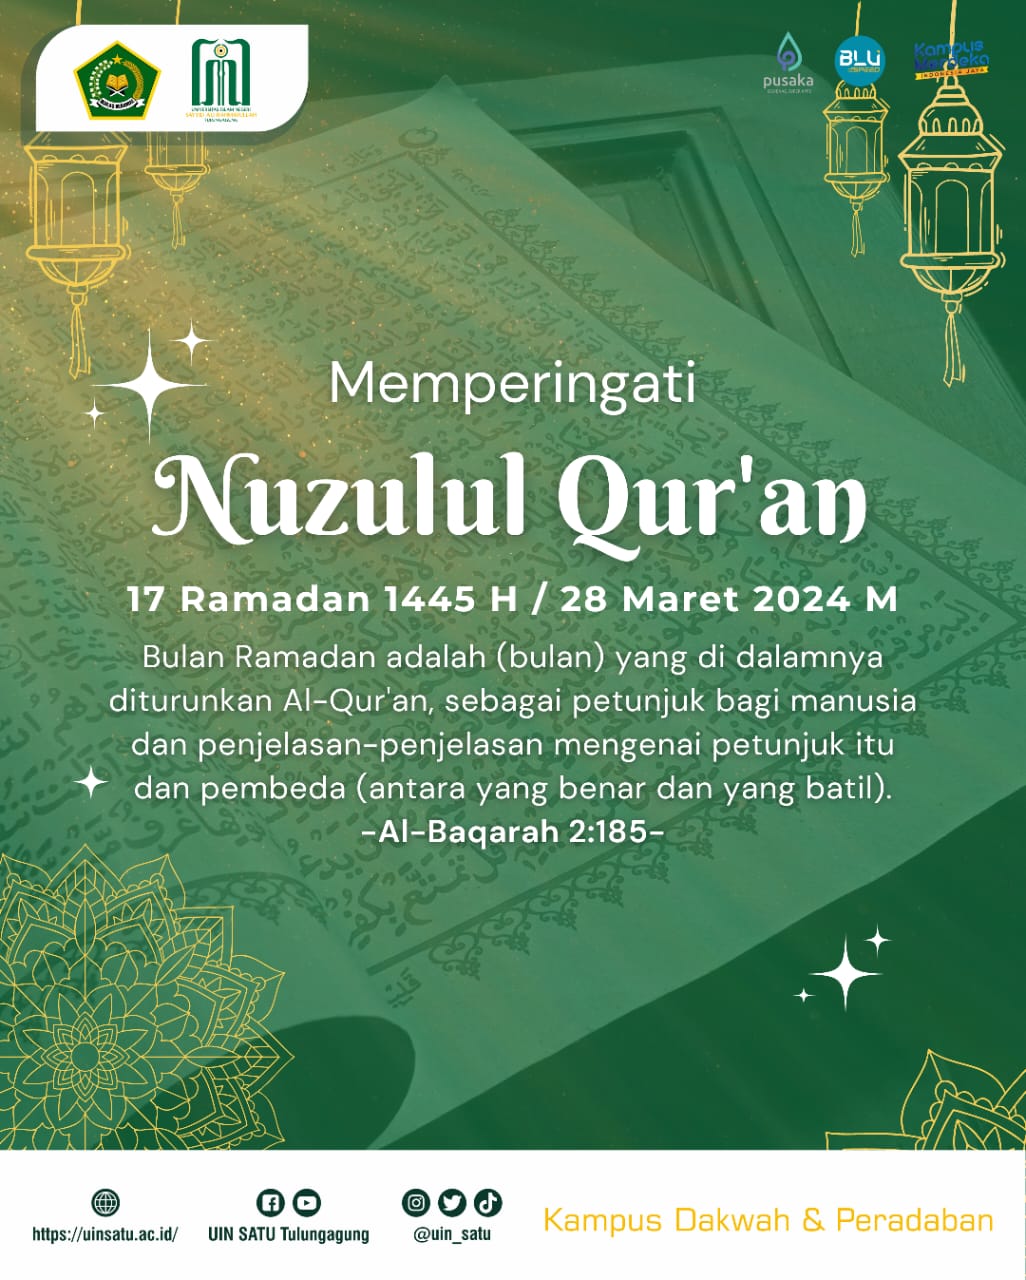 Memperingati Nuzulul Quran 1445H